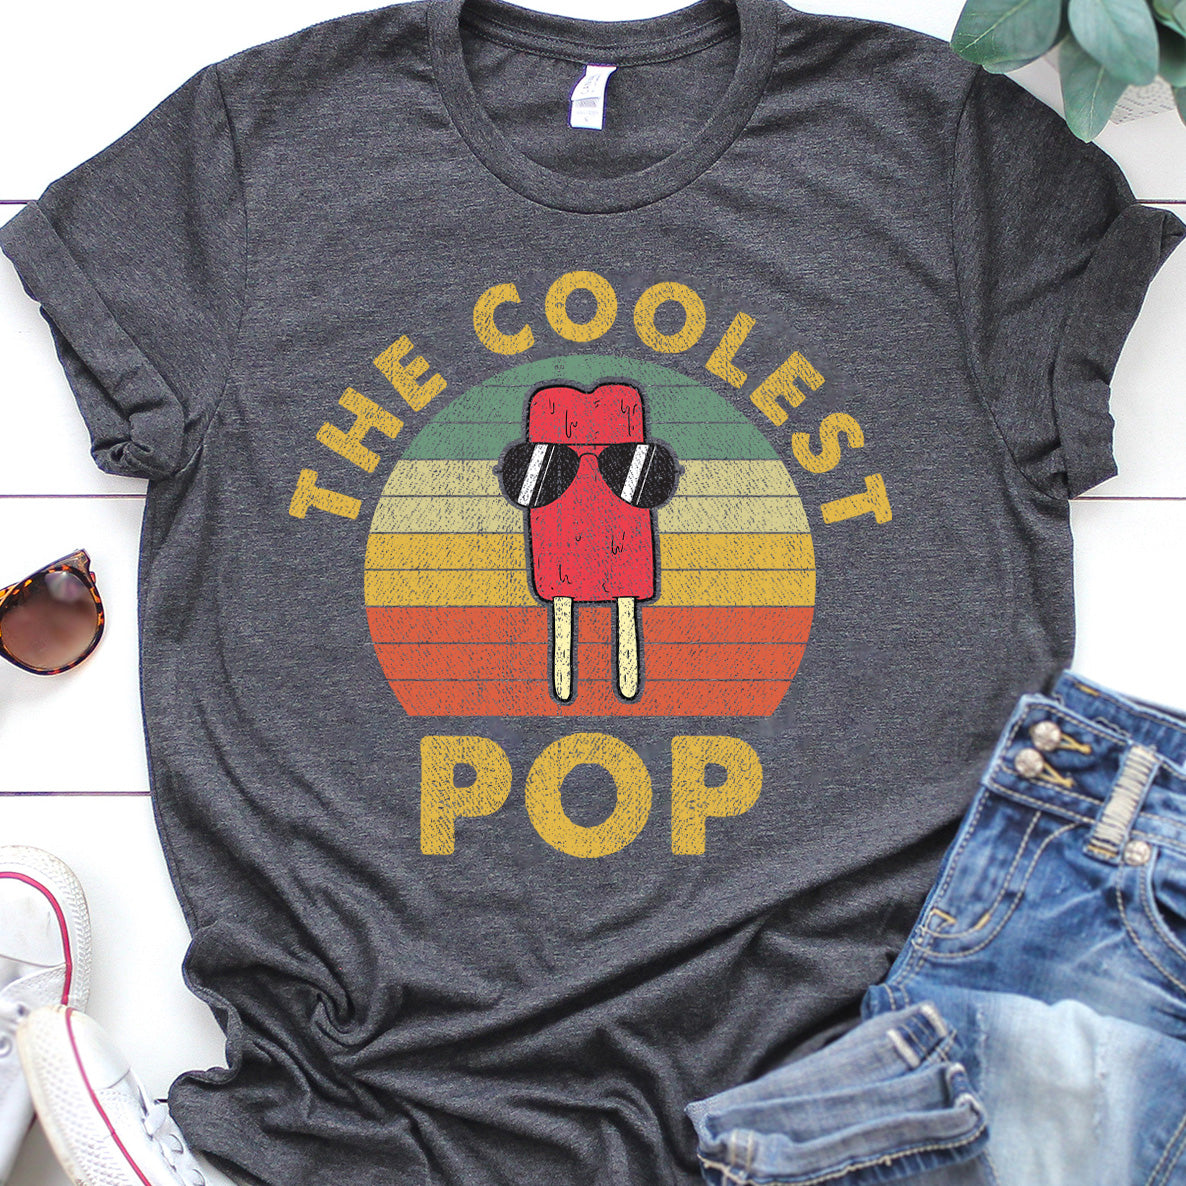 The Coolest Pop Customizable - Standard T-Shirt - DNG Fashion